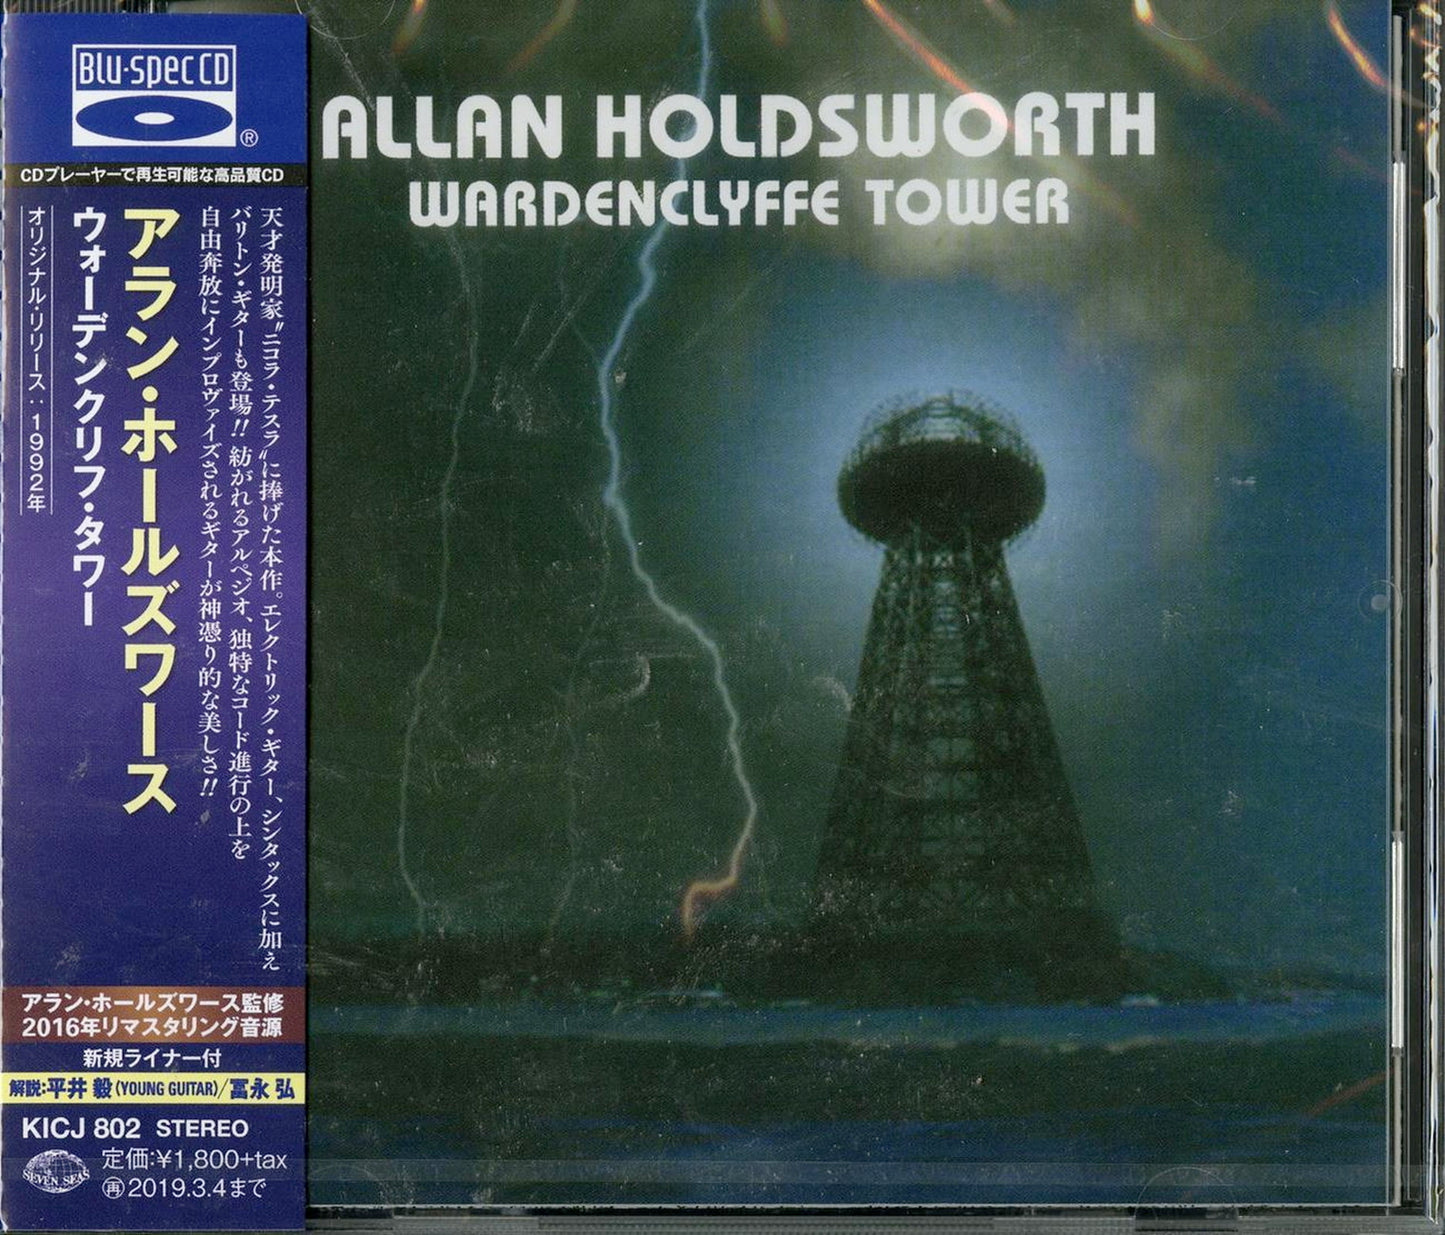 Allan Holdsworth - Wardenclyffe Tower - Japan  Blu-spec CD